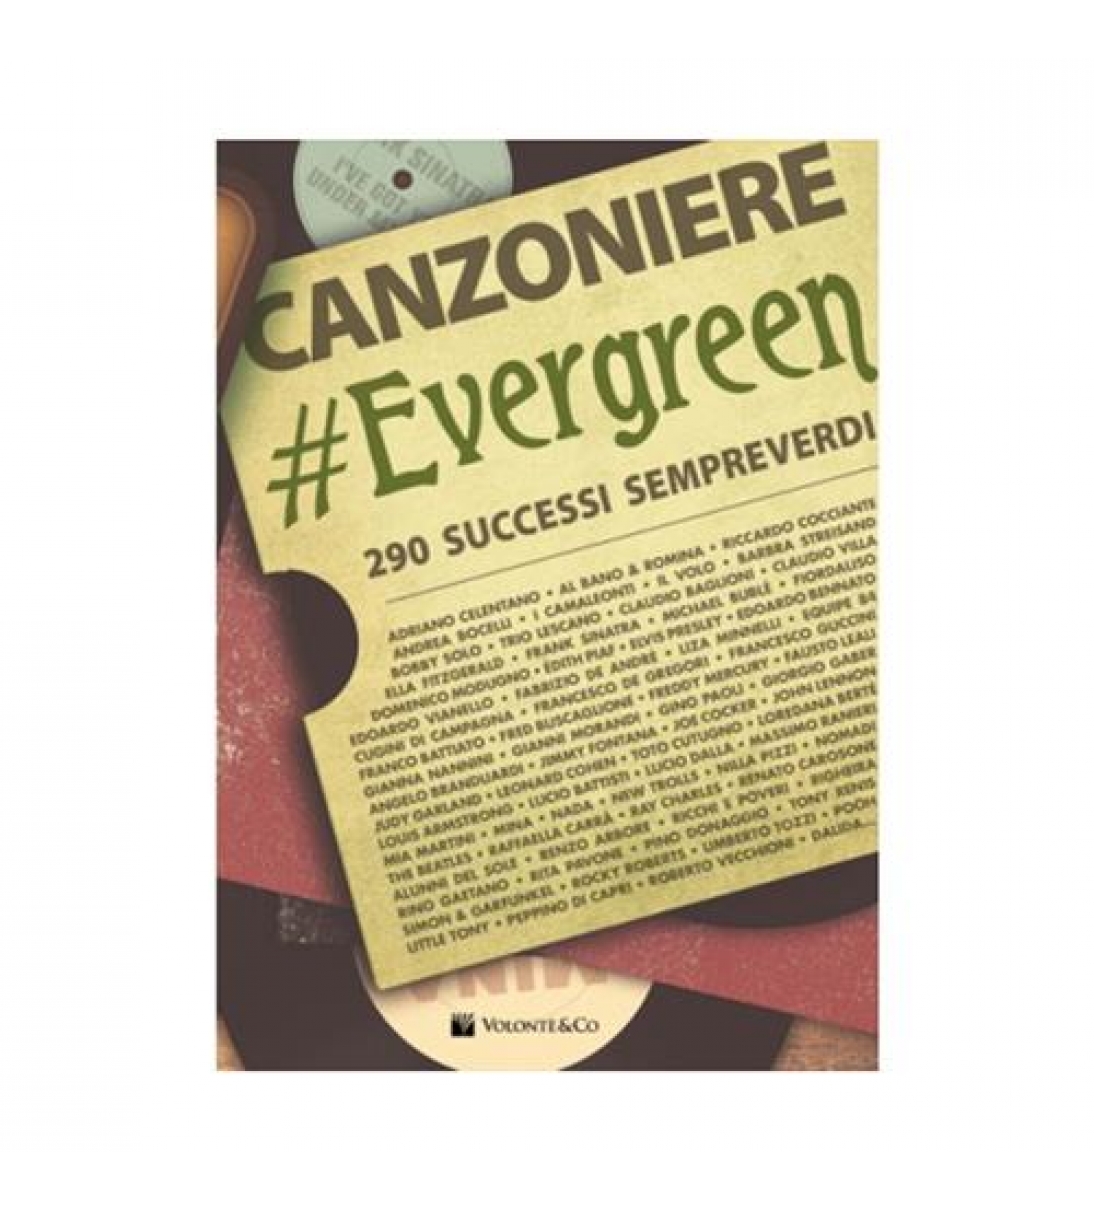 Canzoniere #Evergreen (290 Canzoni)